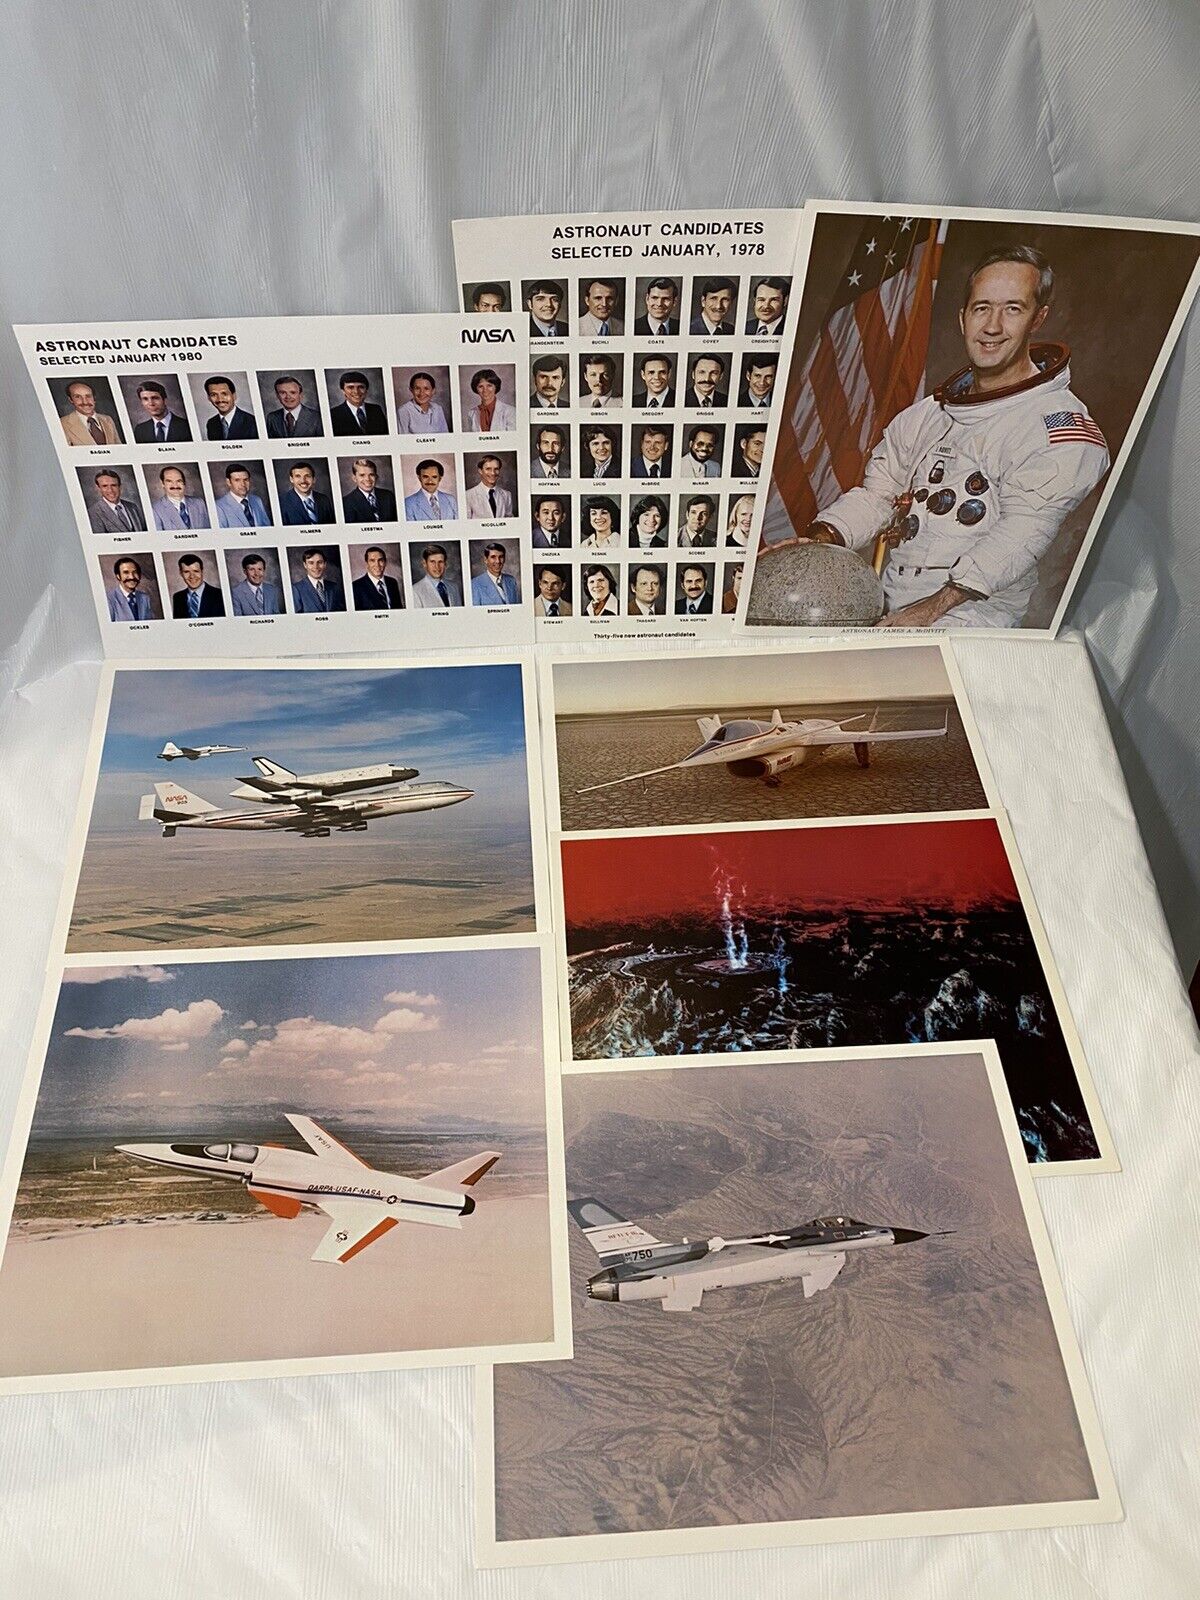 Cintage Nasa Photo Lot of 8 - 1978 Astronauts, shuttle, Venus Concept & more